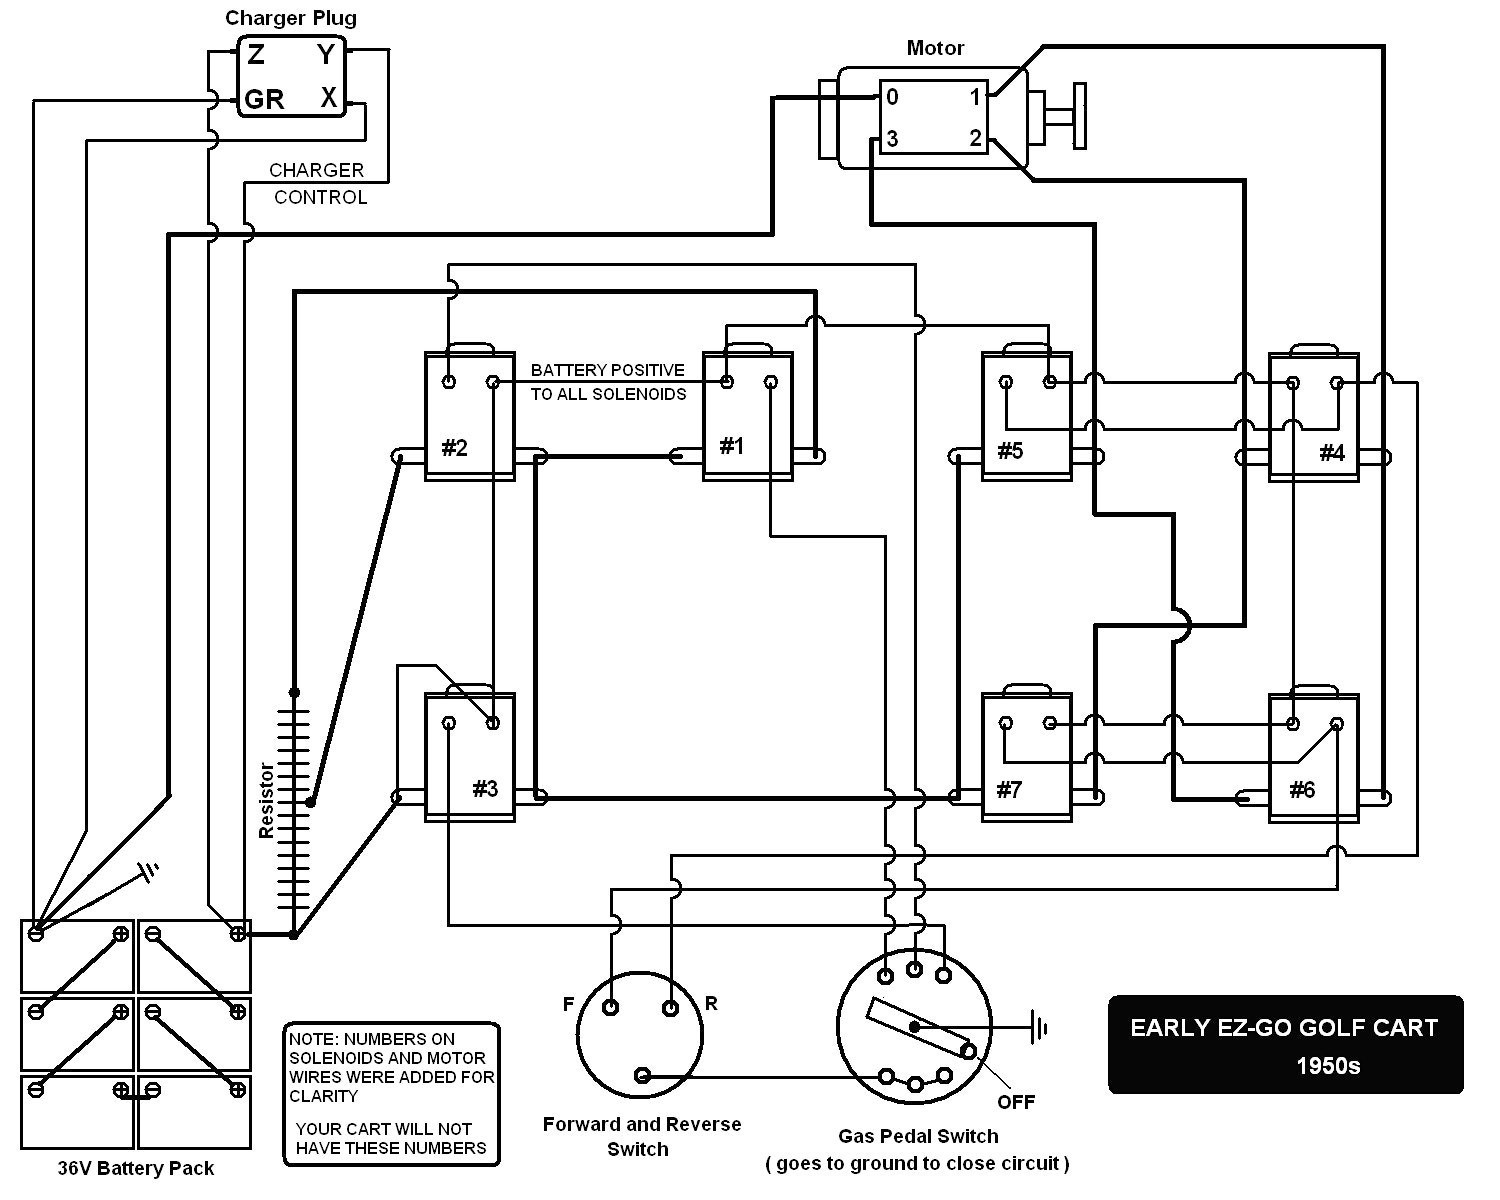 Club Car Battery Wiring Diagram 36 Volt from mainetreasurechest.com